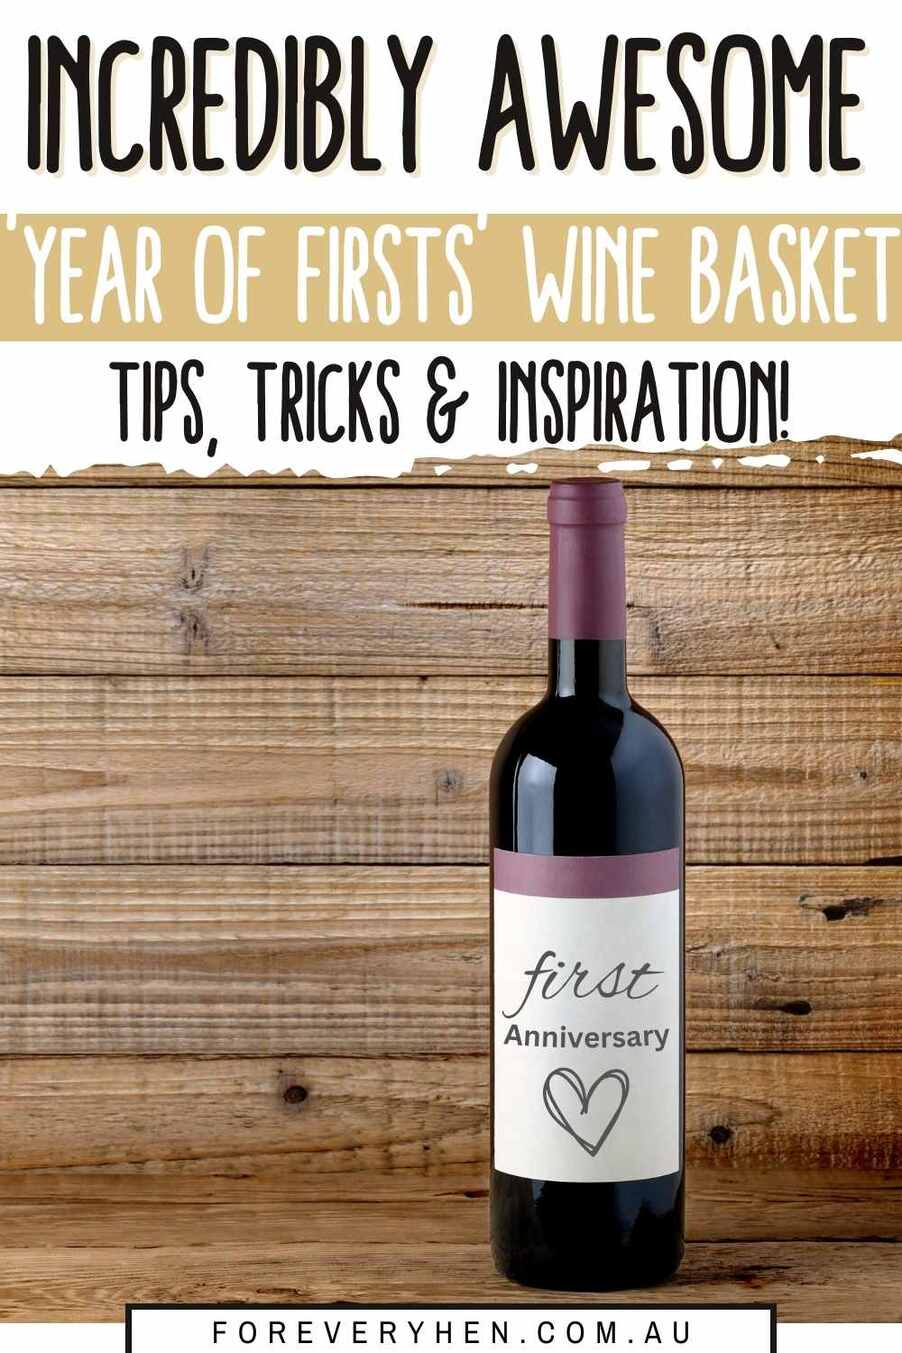 http://www.foreveryhen.com.au/uploads/3/1/5/3/31534501/published/year-of-firsts-wine-basket-ideas-pinterest-9.jpg?1700027418